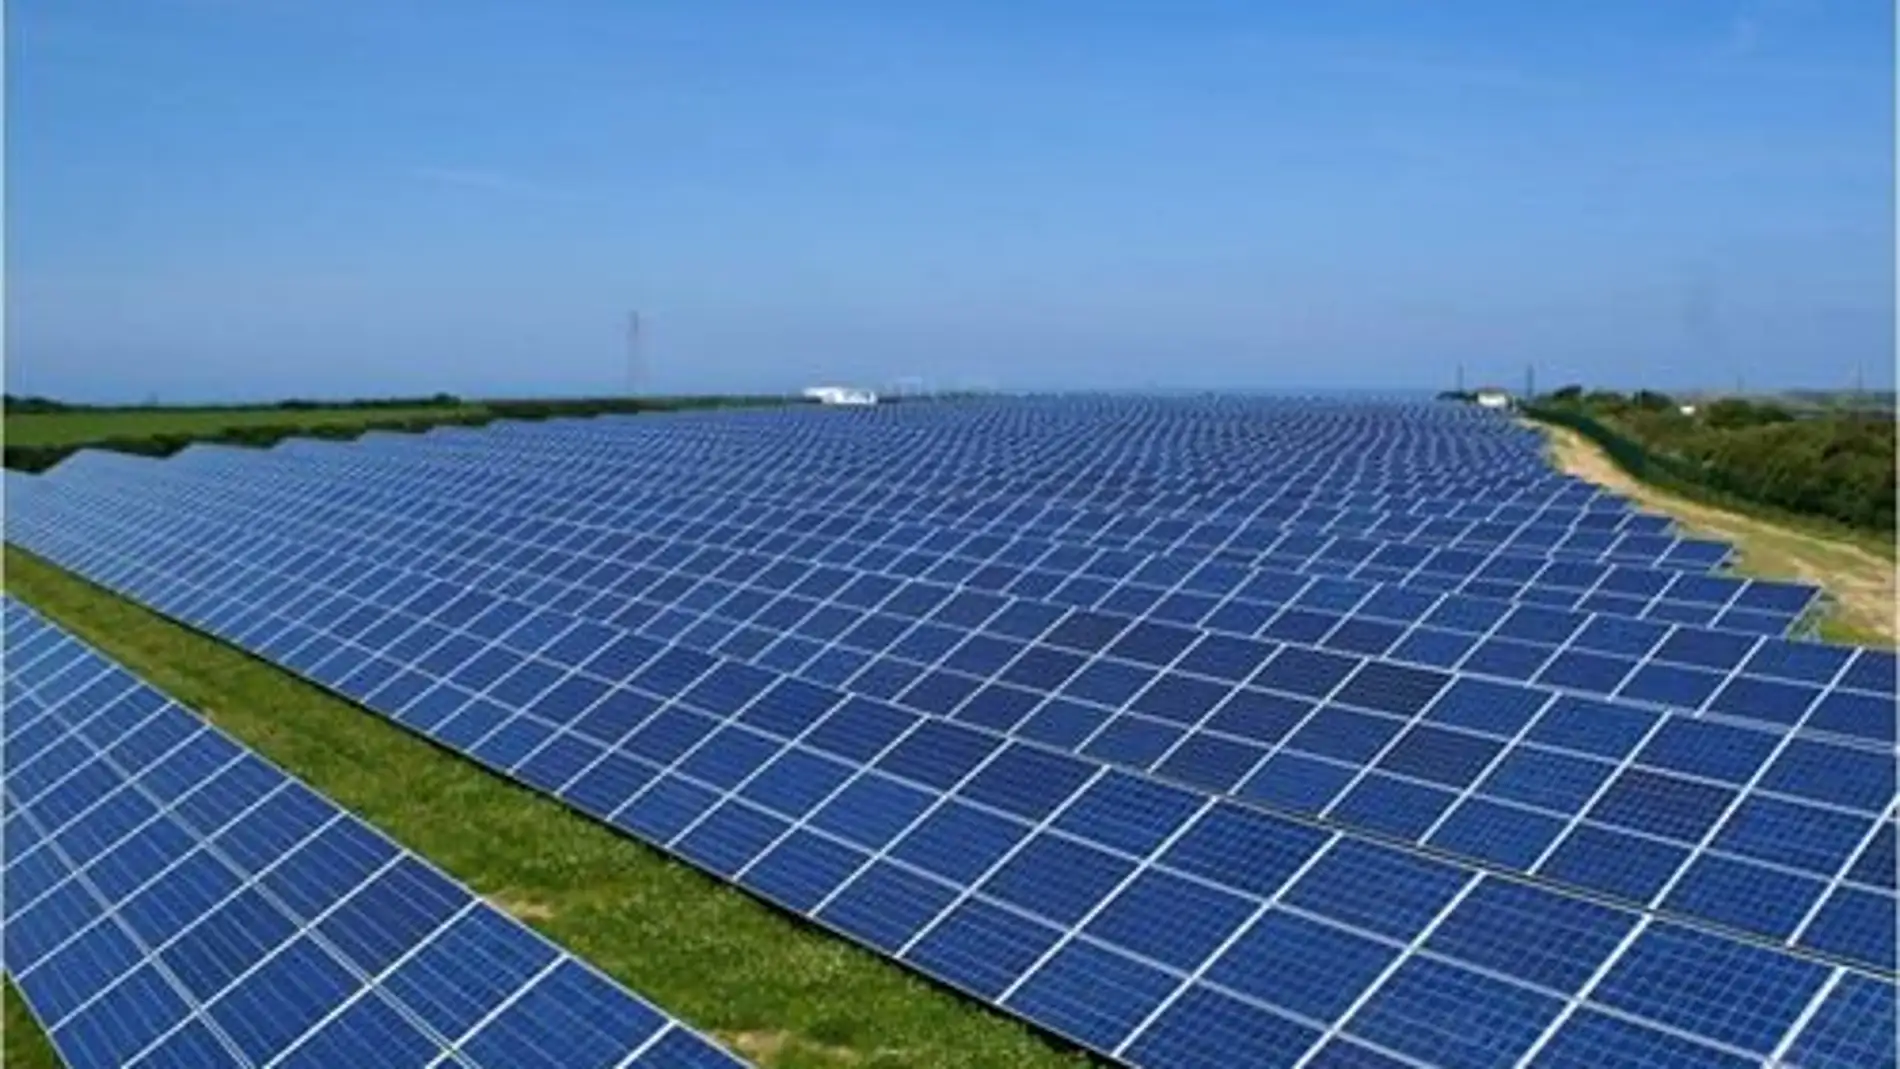 Porzuna contará con dos plantas fotovoltaicas con 151.000 módulos